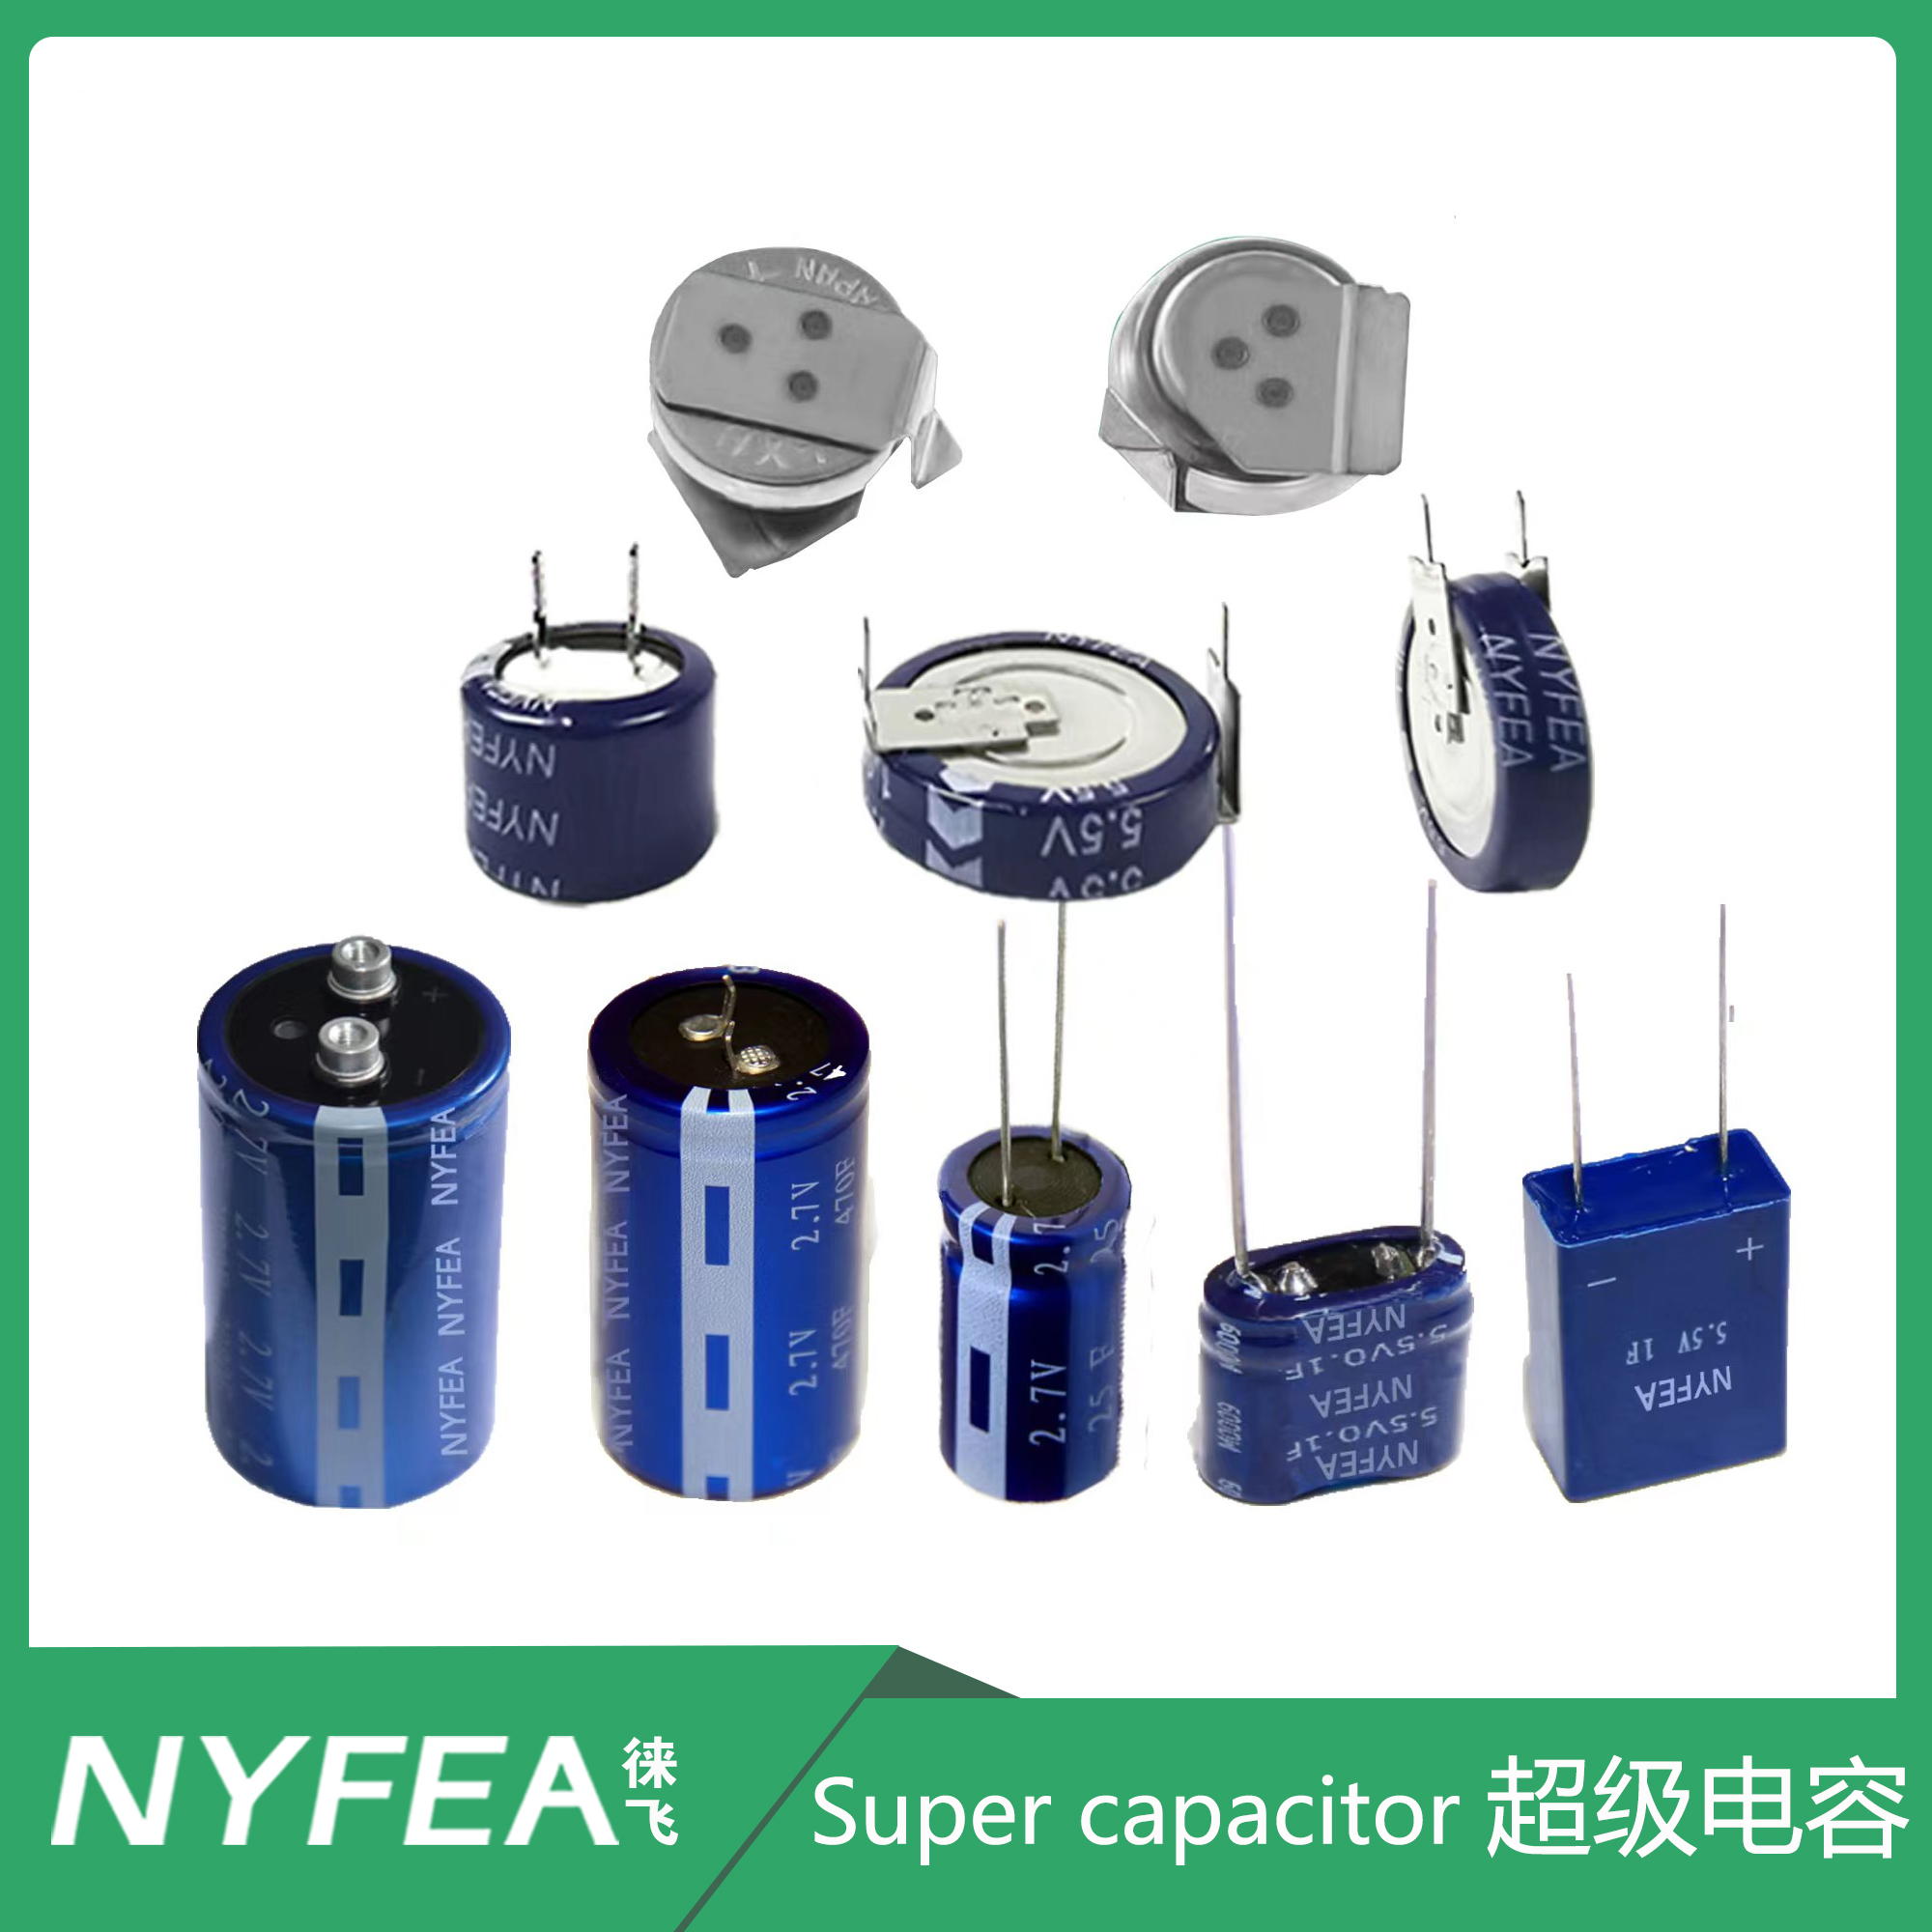 Farad capacitor法拉電容與普通電容、電池有什么不同？